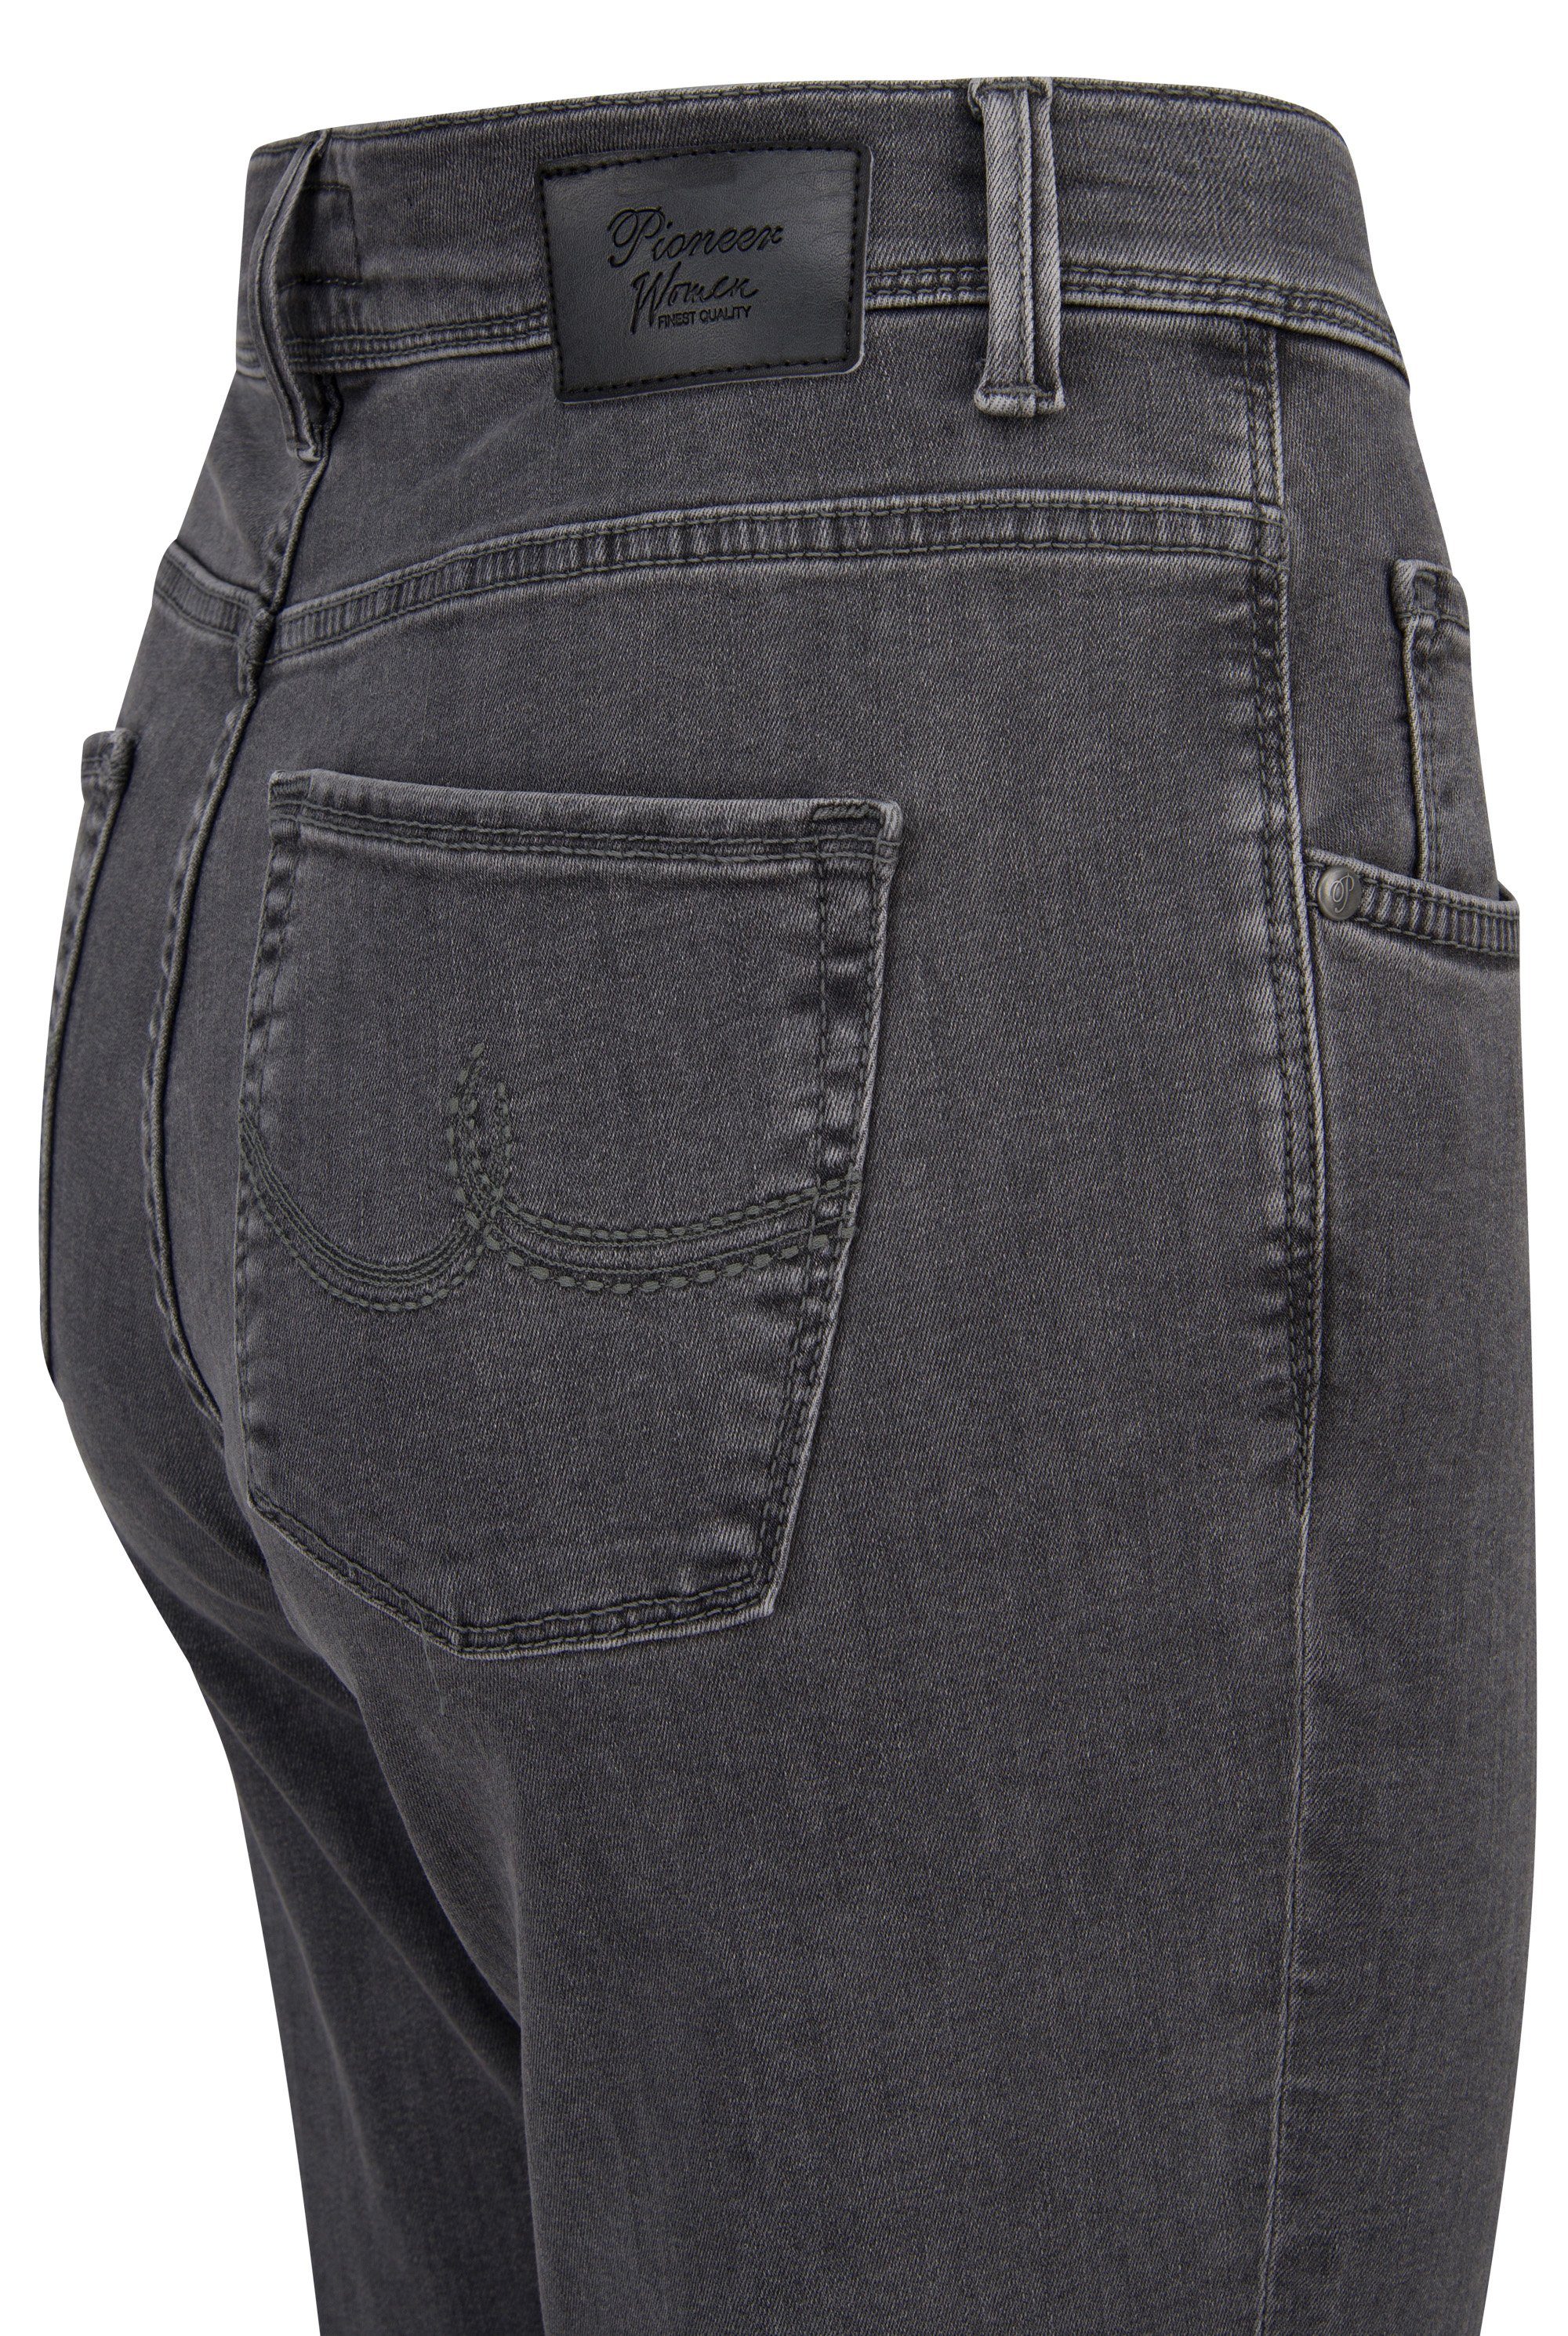 Pioneer Authentic Jeans stonewash 3098.9831 grey POWERSTRETCH 4012 Stretch-Jeans PIONEER - BETTY